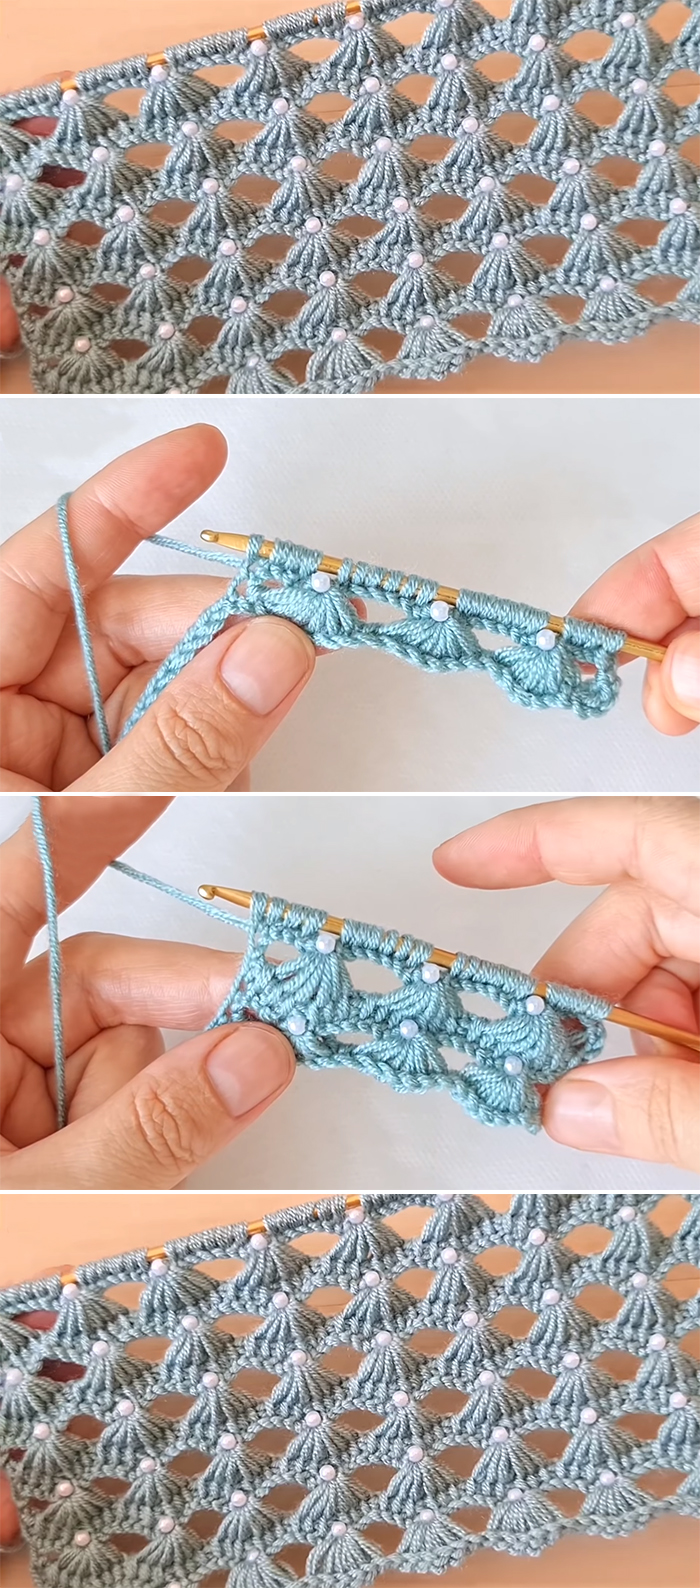 Crochet Stitch With beads